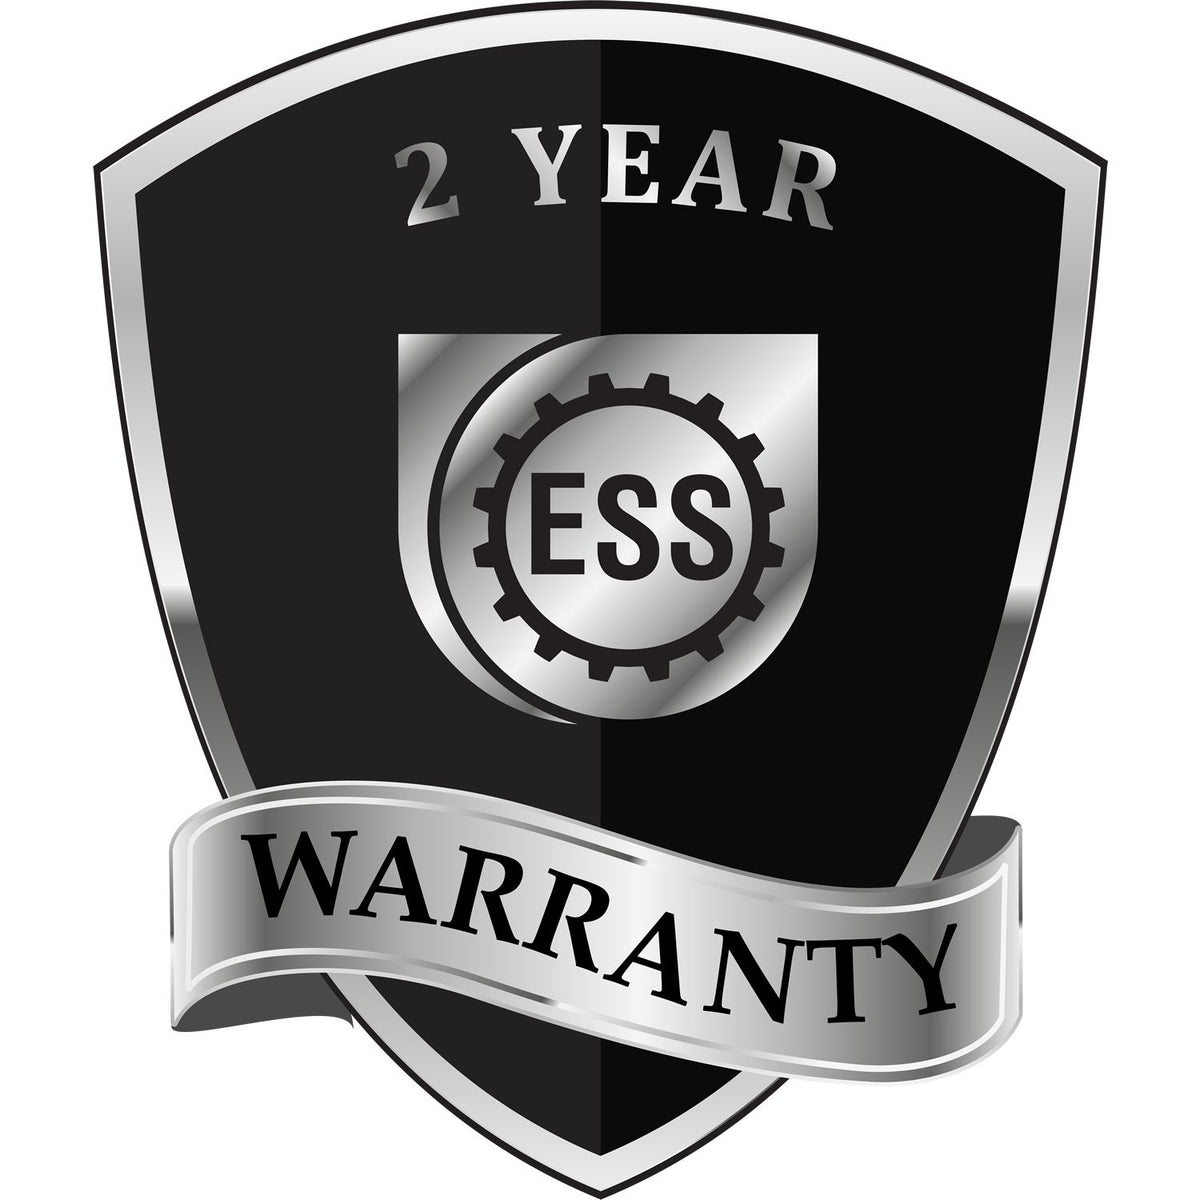 A badge or emblem showing a warranty icon for the Montana Desk Surveyor Seal Embosser